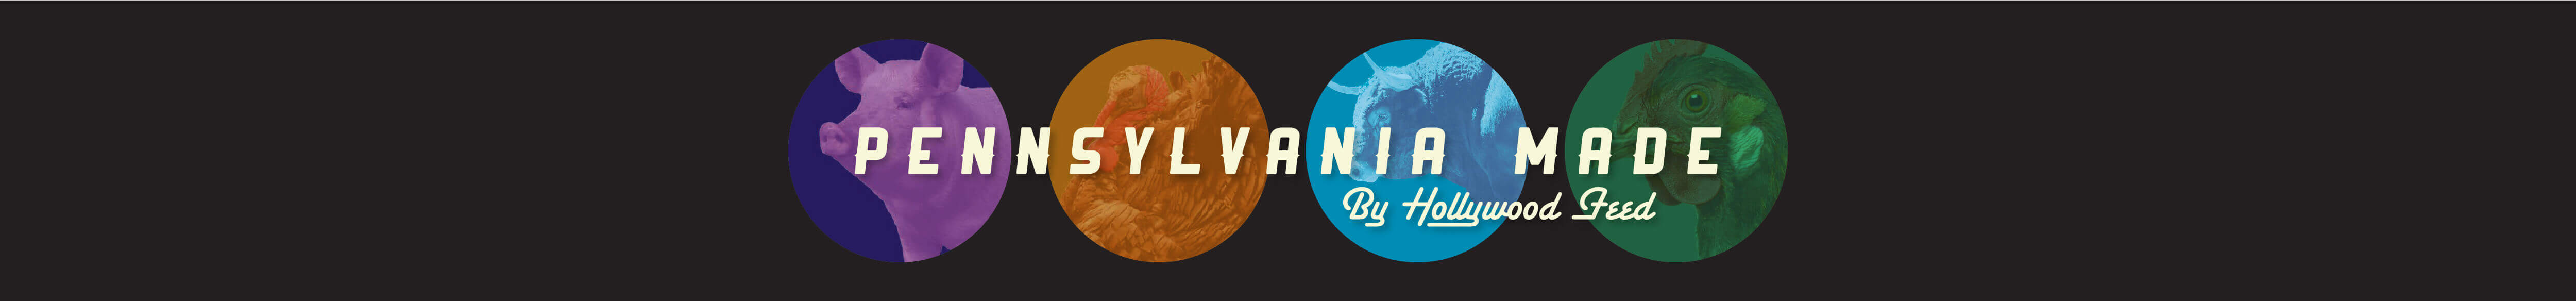 Pennsylvania Made by Hollywood Feed Logo